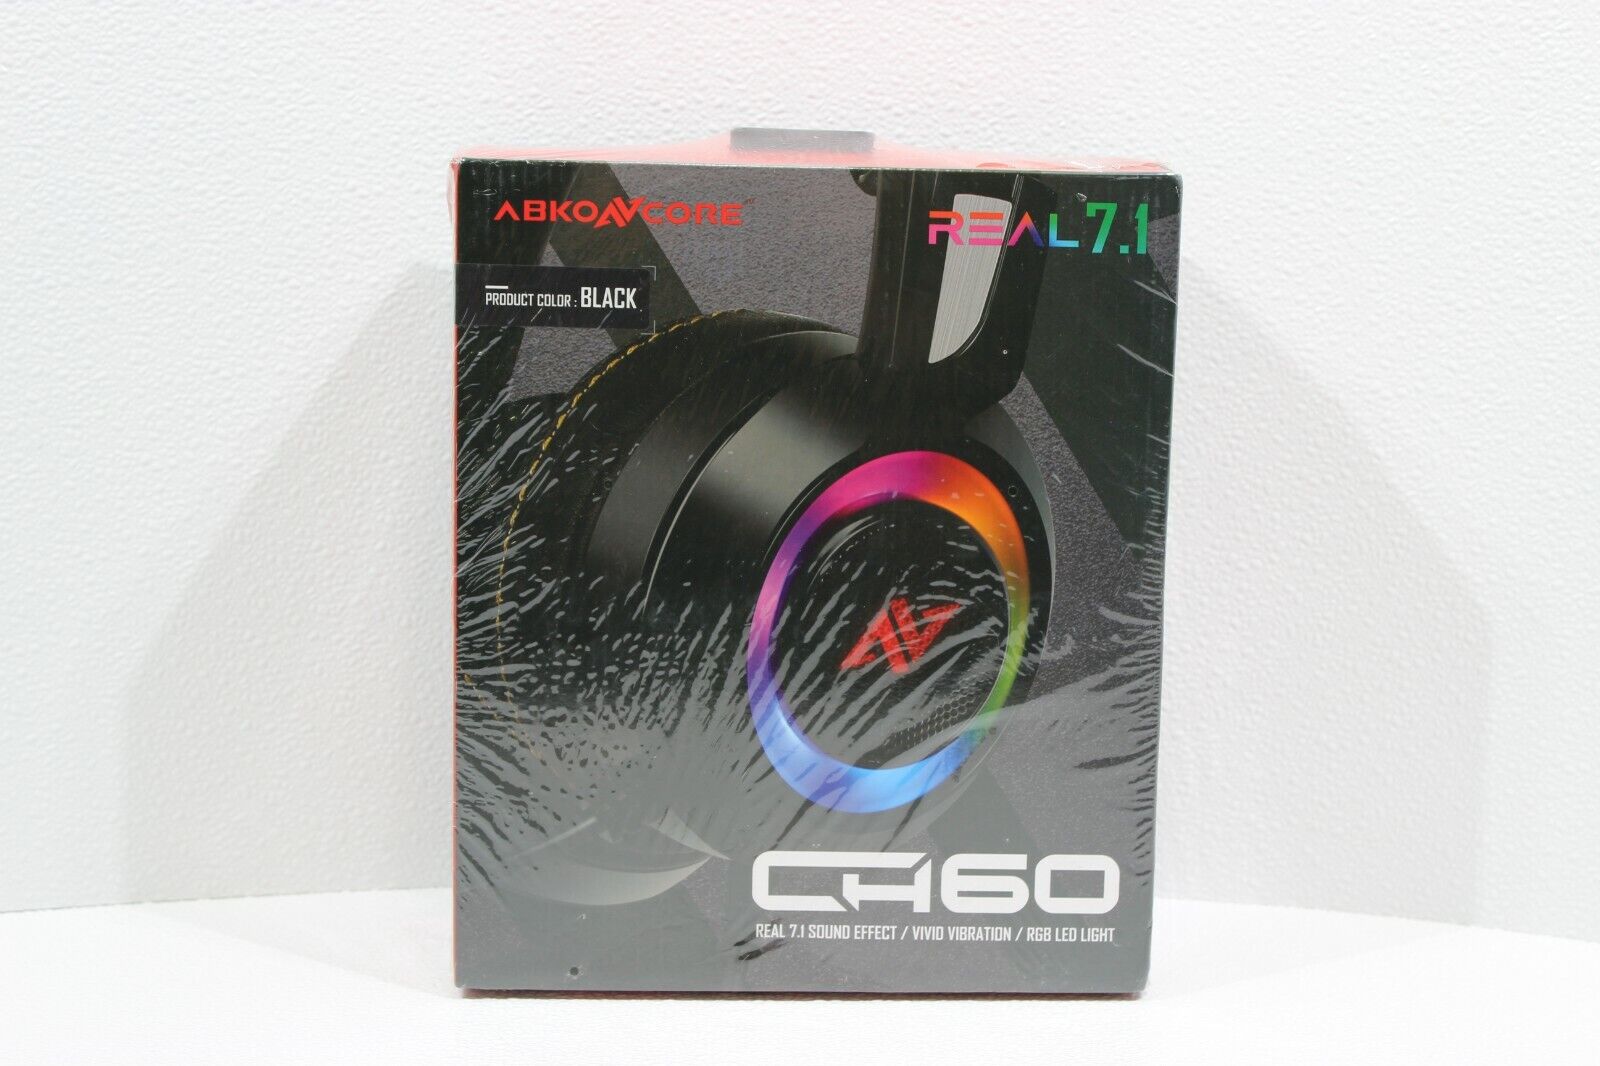 BRAND NEW Abko Core GAMING Headset CH60 7.1 Sound Effort Vivid Vibrant BLACK